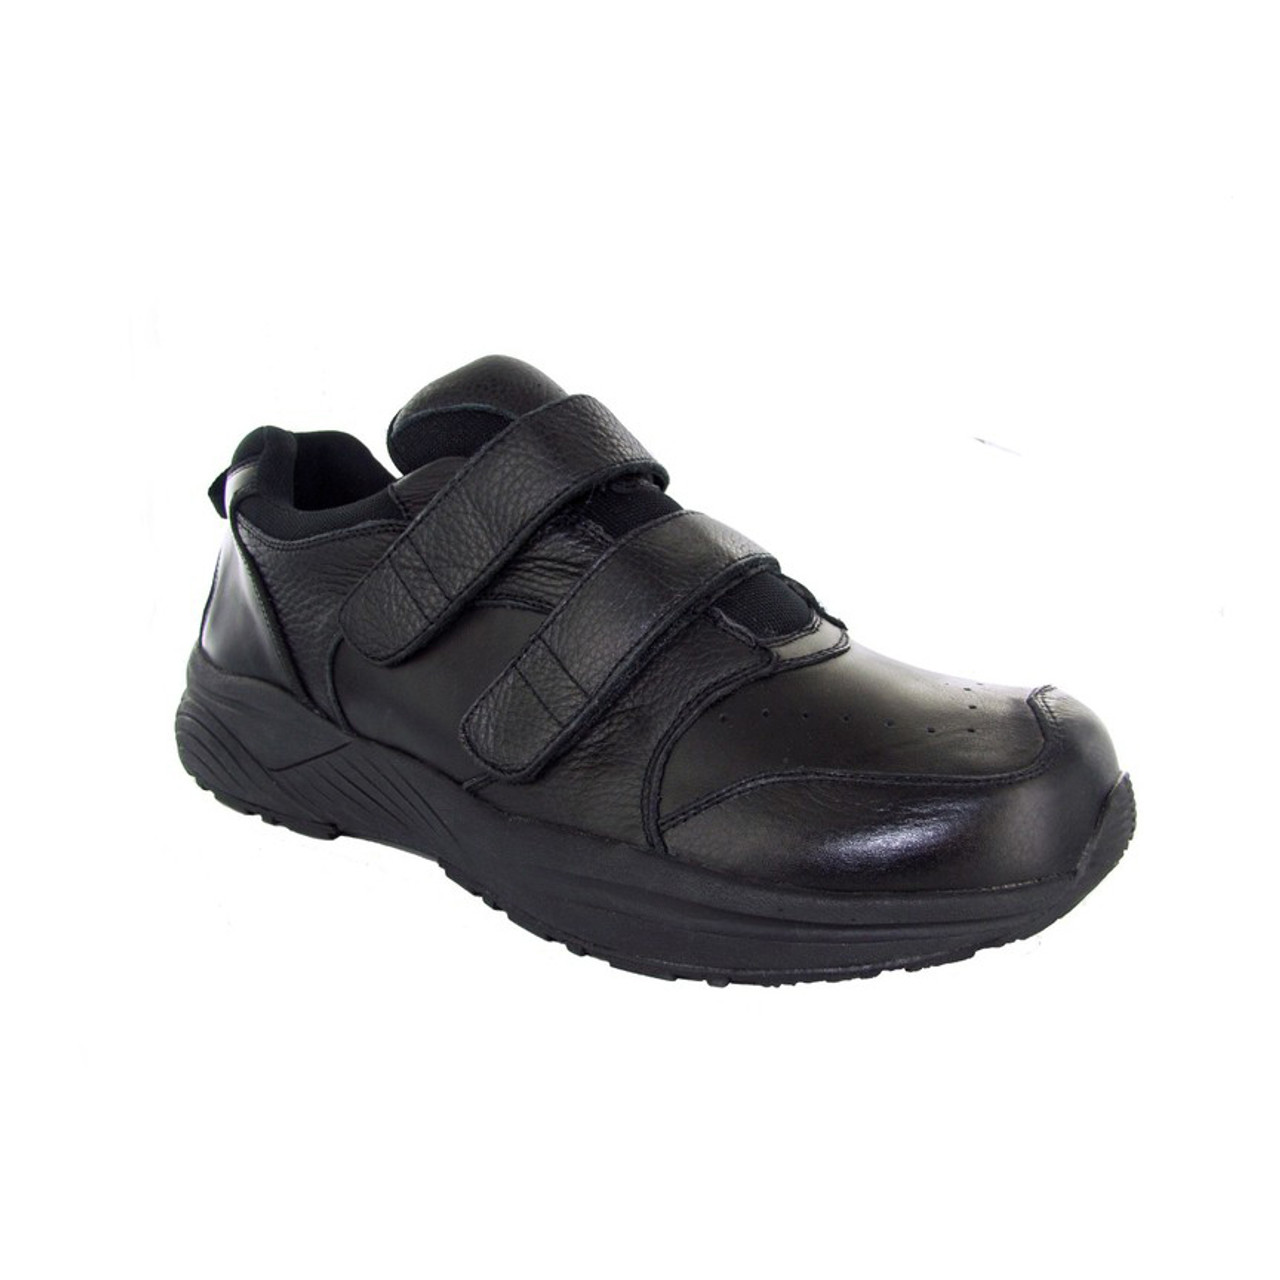 Kids Walking velcro shoes Actiwalk Super Light - Black